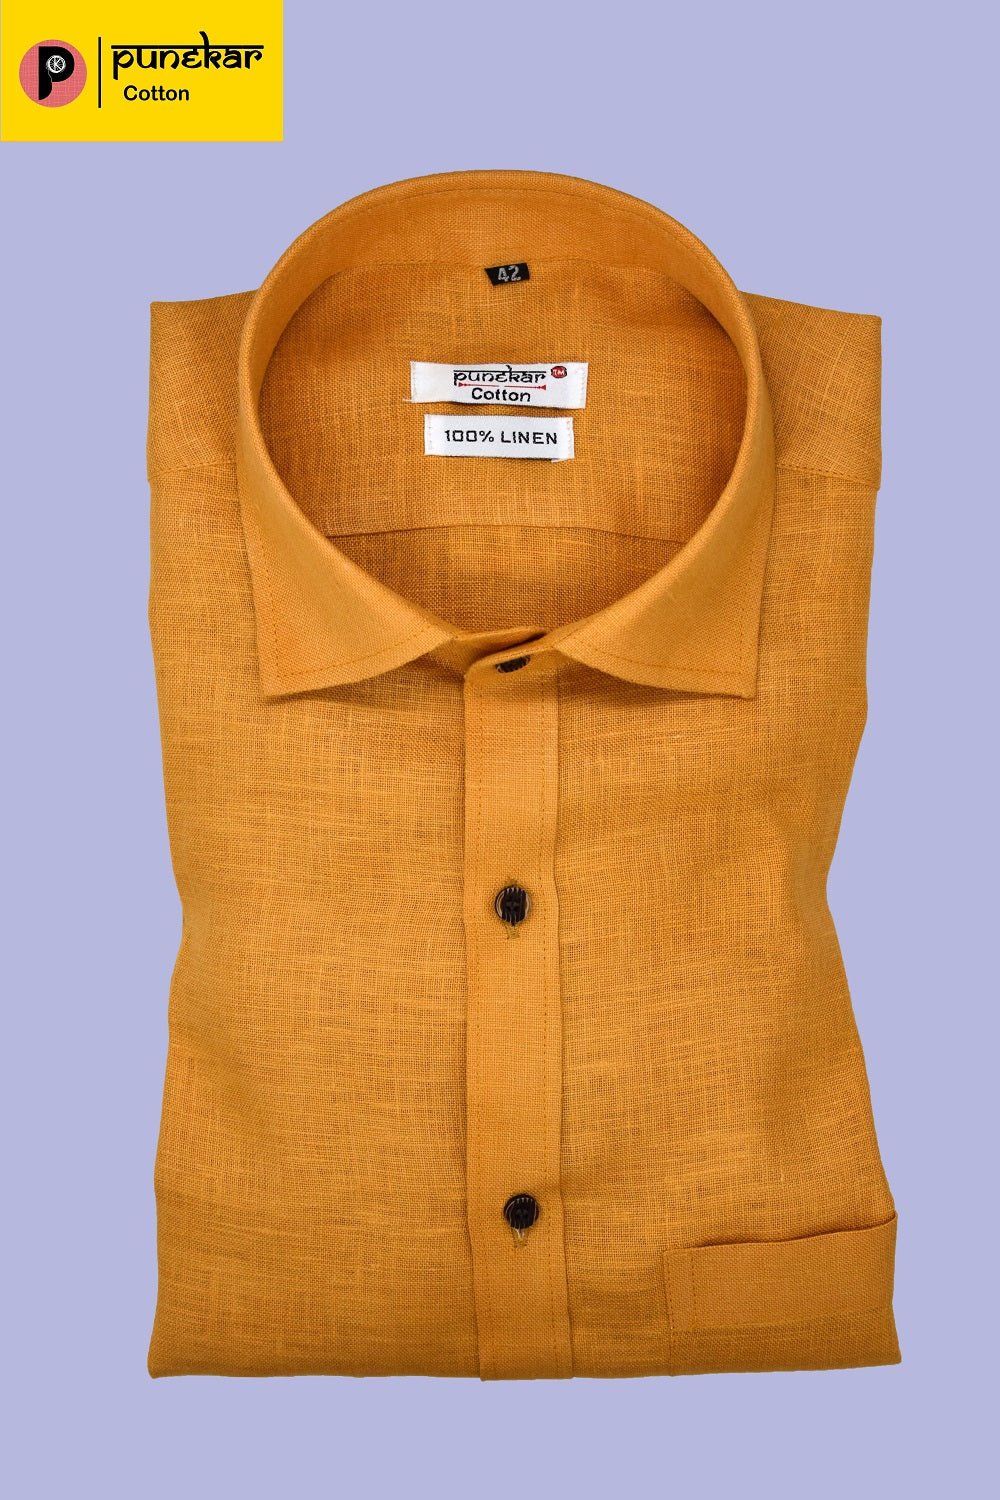 Punekar Cotton Golden Color Formal Linen shirts for Men's